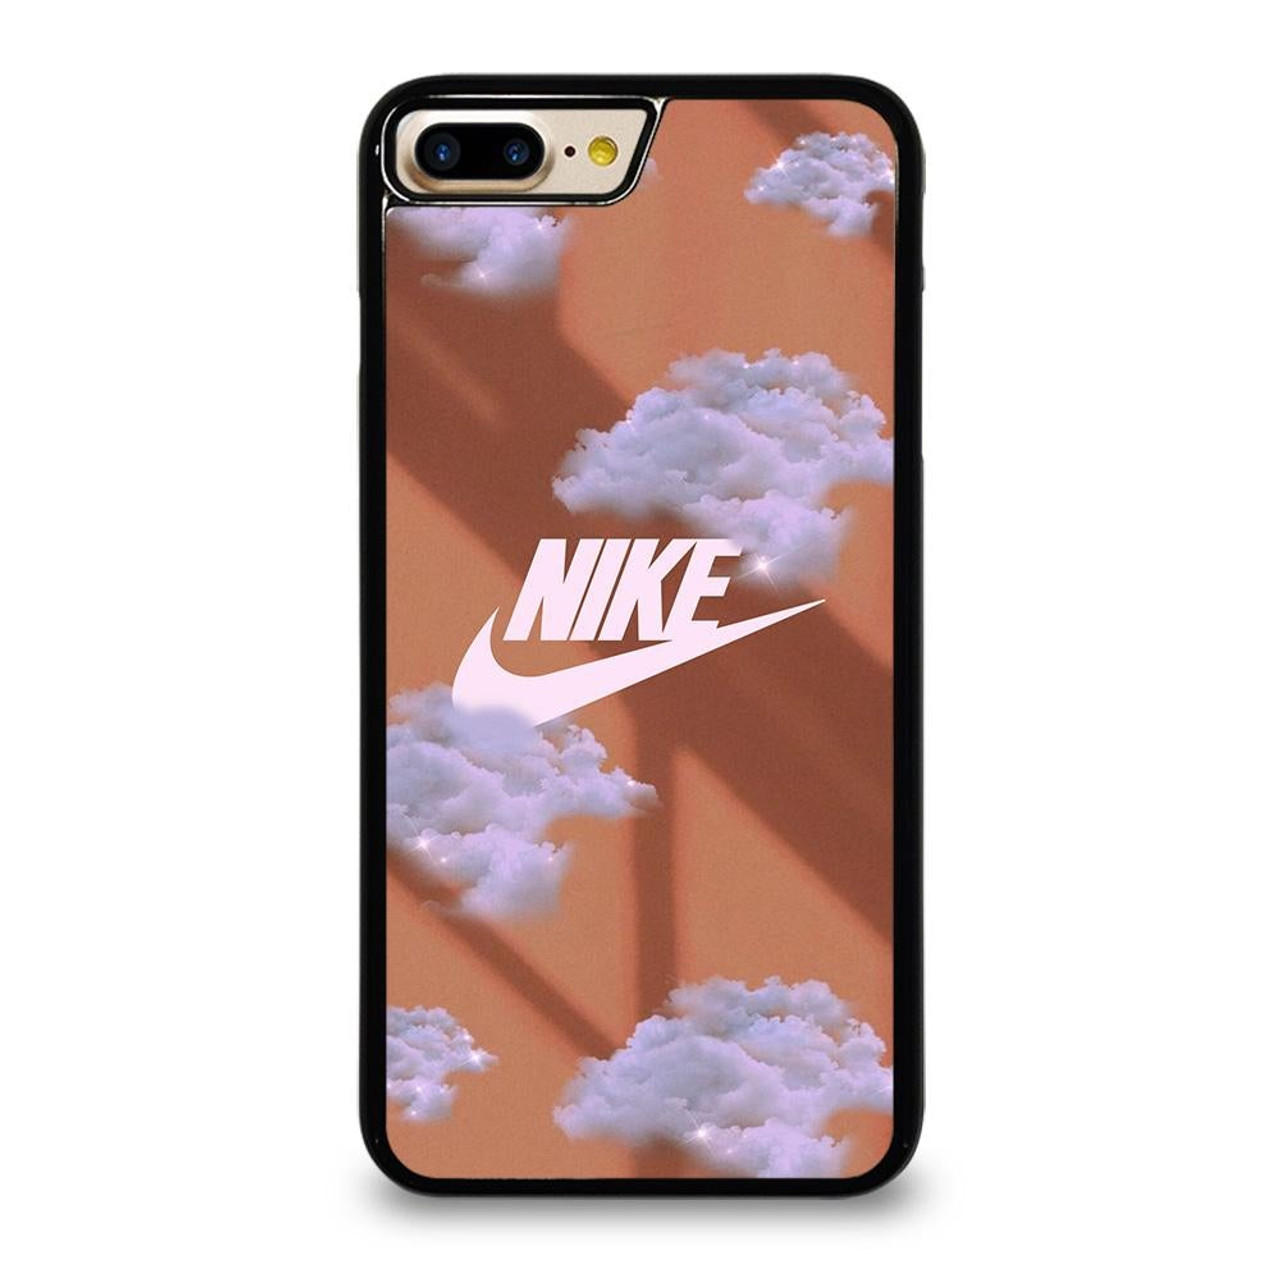 NIKE CLOUD iPhone / 8 Plus Case Cover